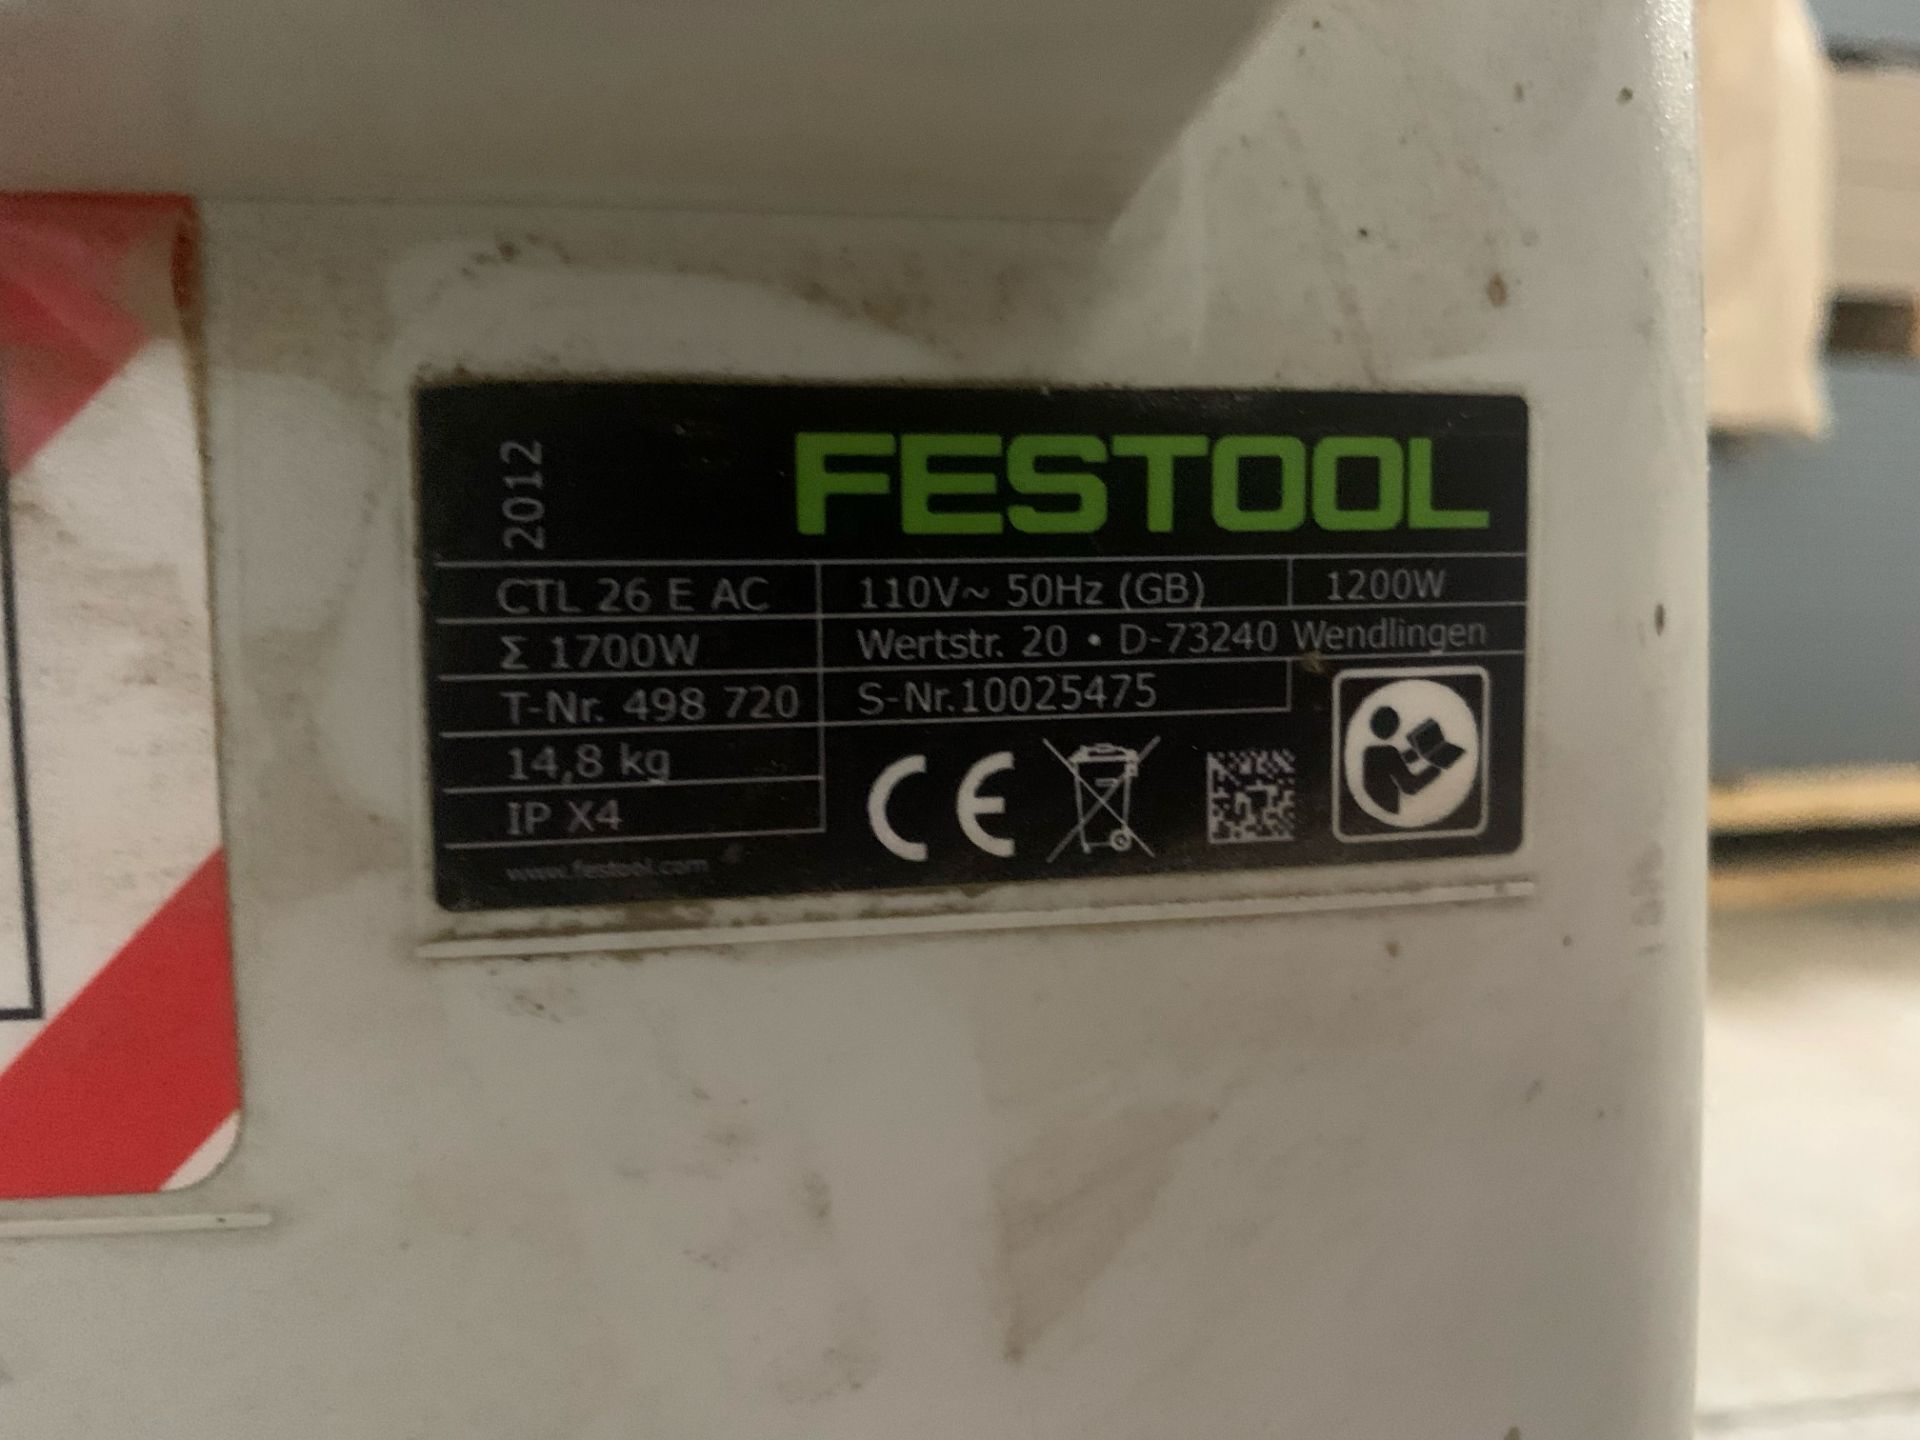 3 Festool Auto Clean Vacuum Cleaner Assemblies (For Spares or Repair) - Image 4 of 4